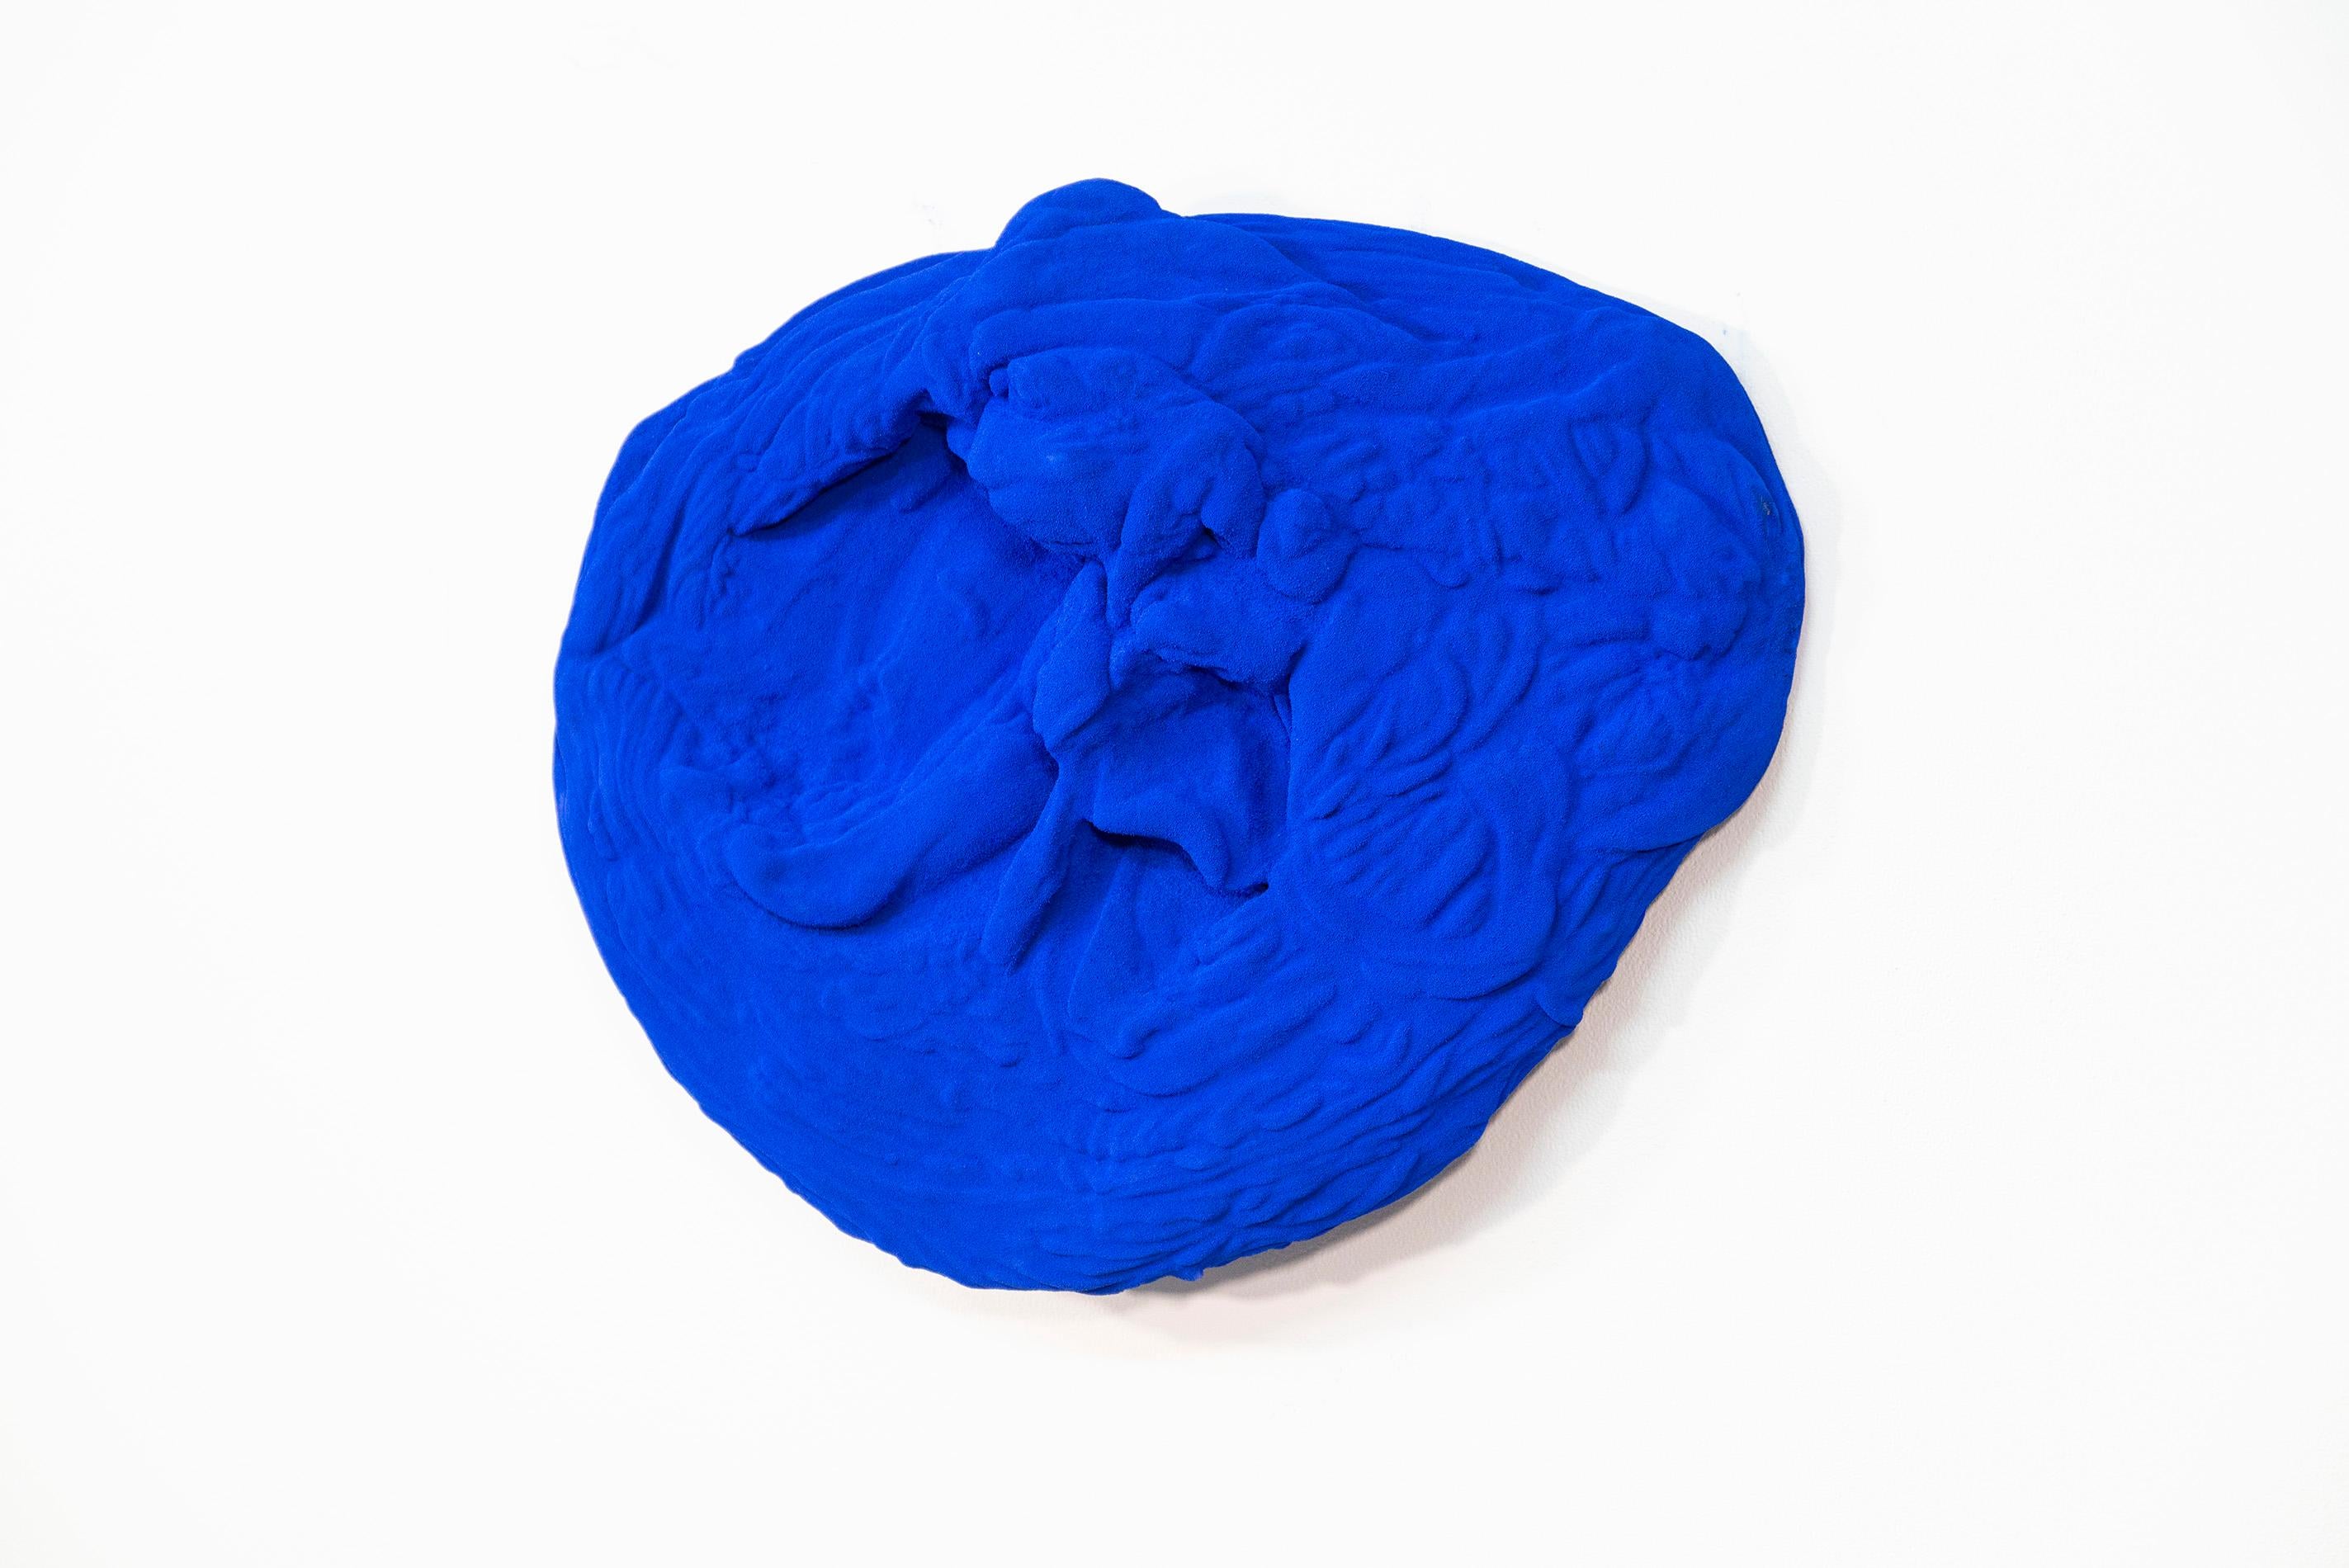 Blue Matter 1 - matte, blue, textured, abstract, mixed media wall sculpture - Contemporary Mixed Media Art by Shayne Dark